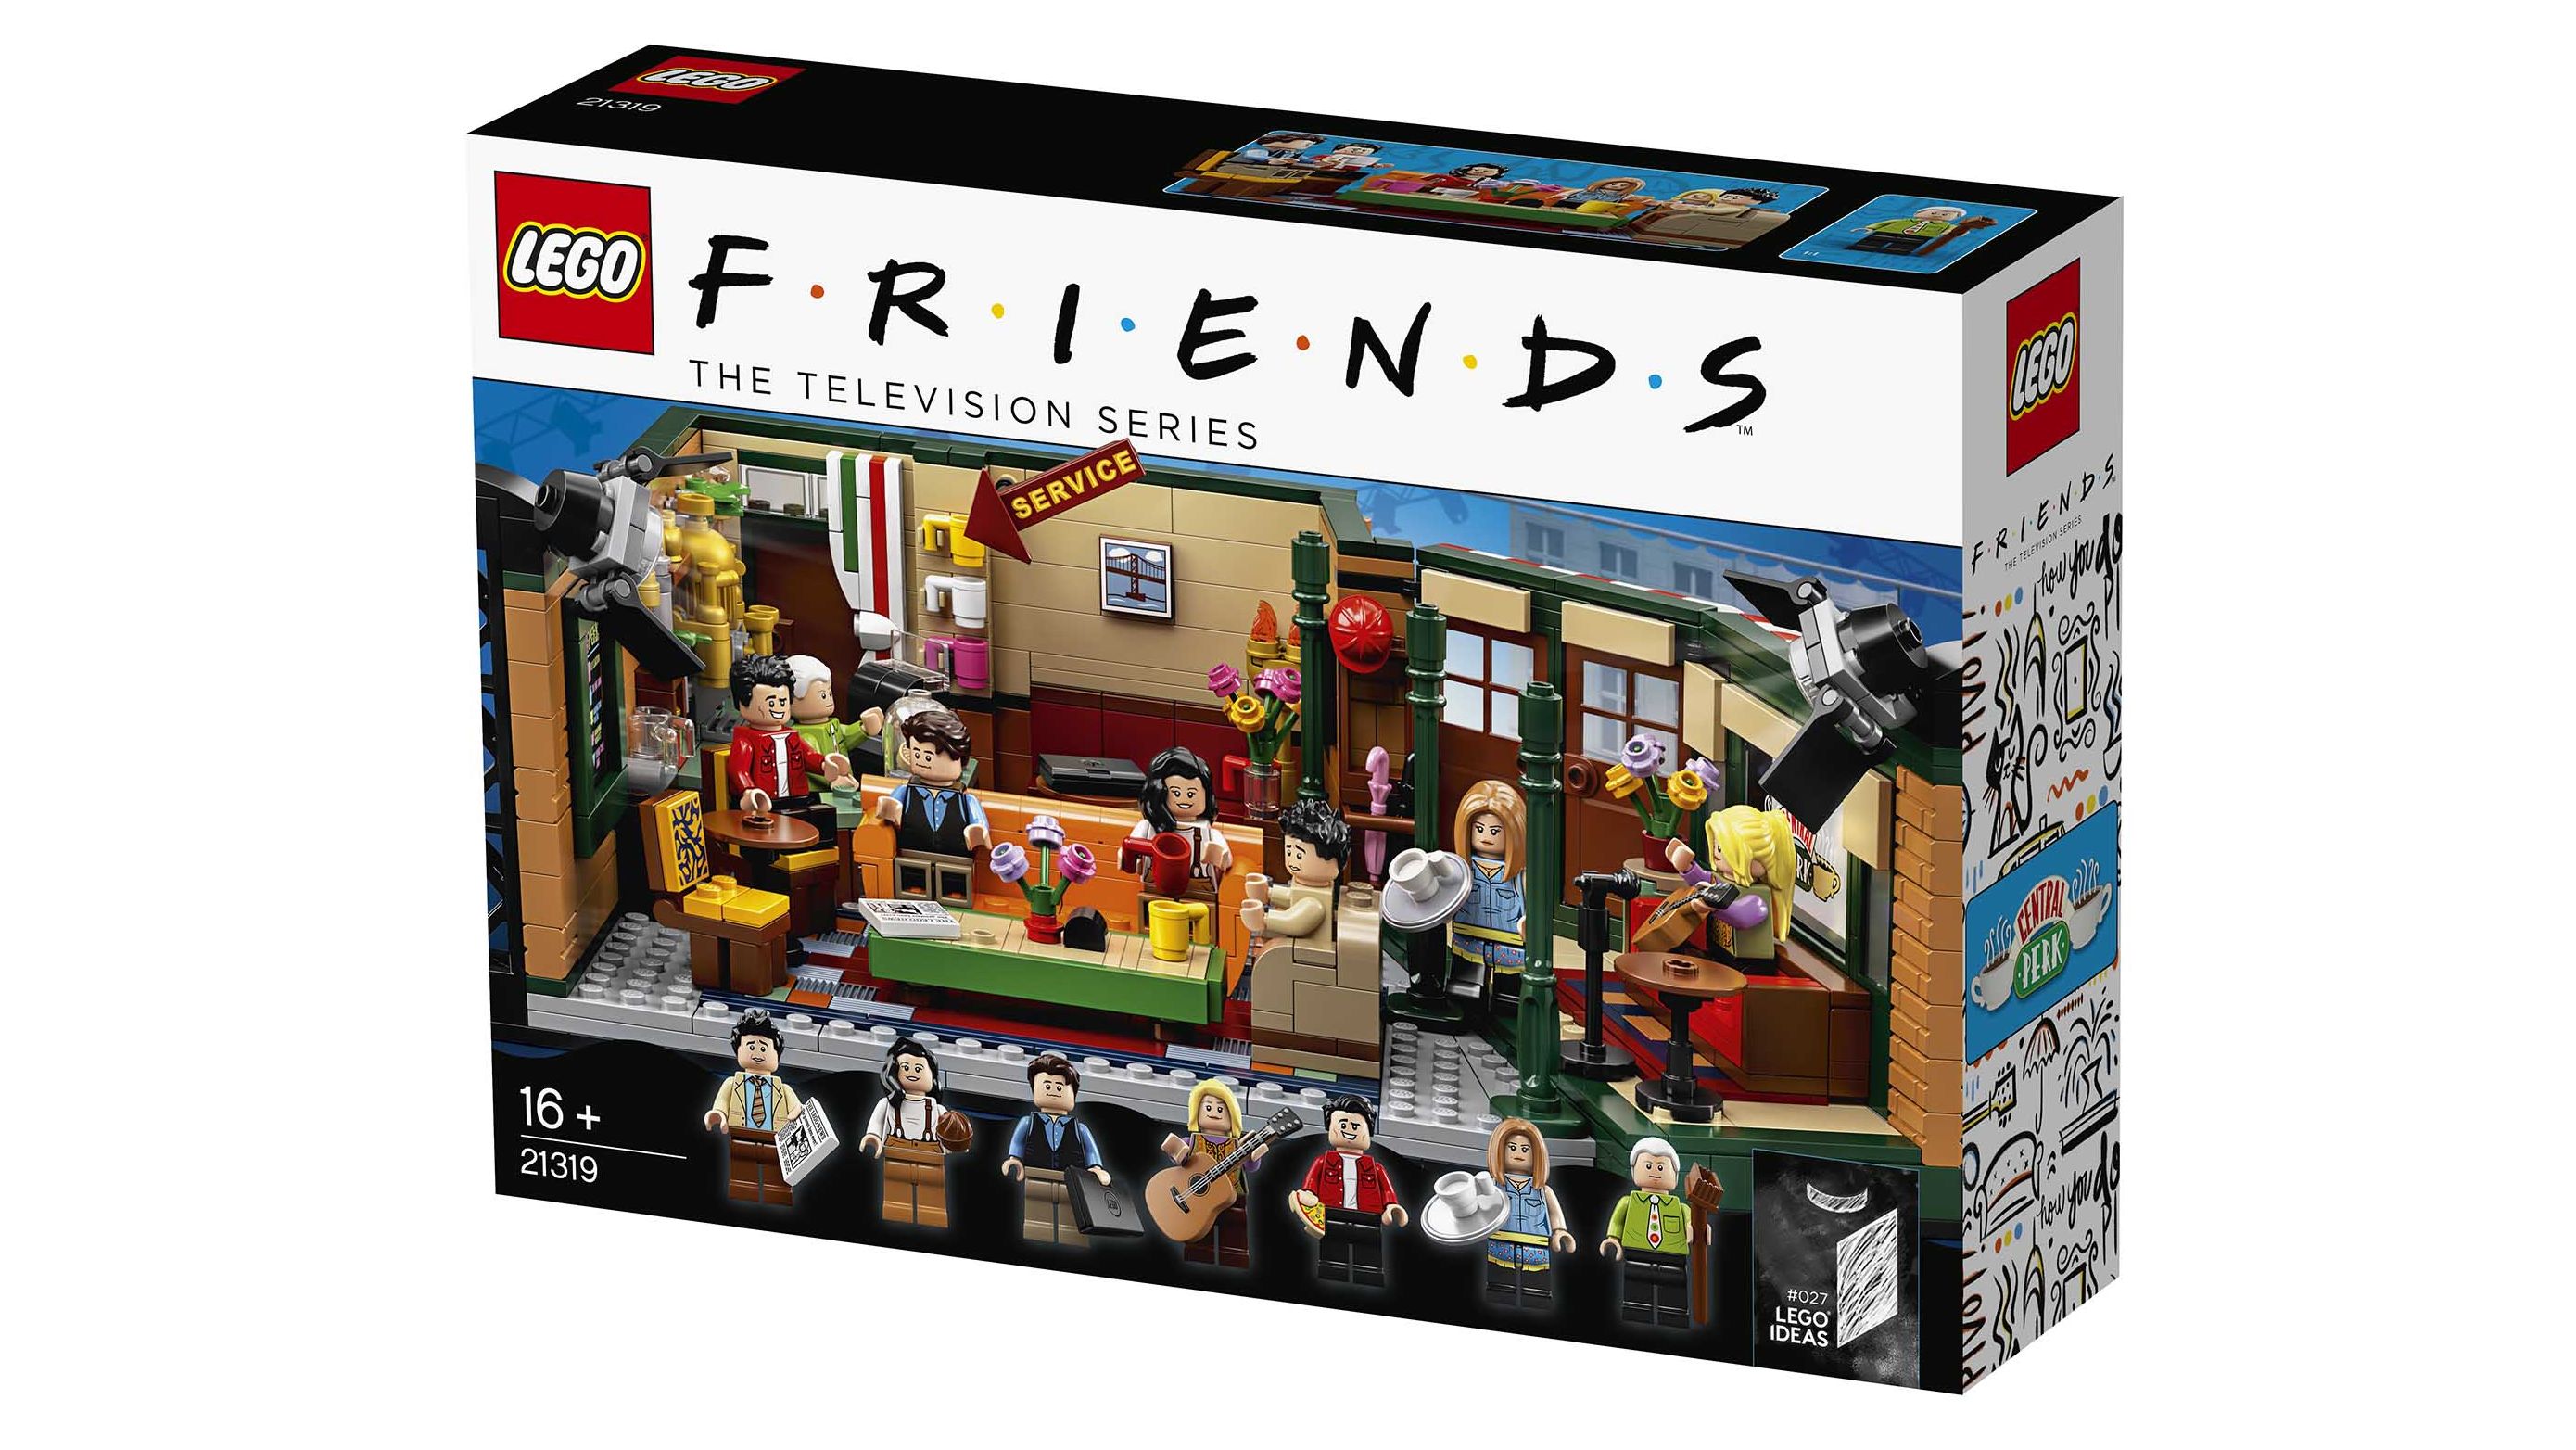 Lego anniversary with Central Perk set | CNN